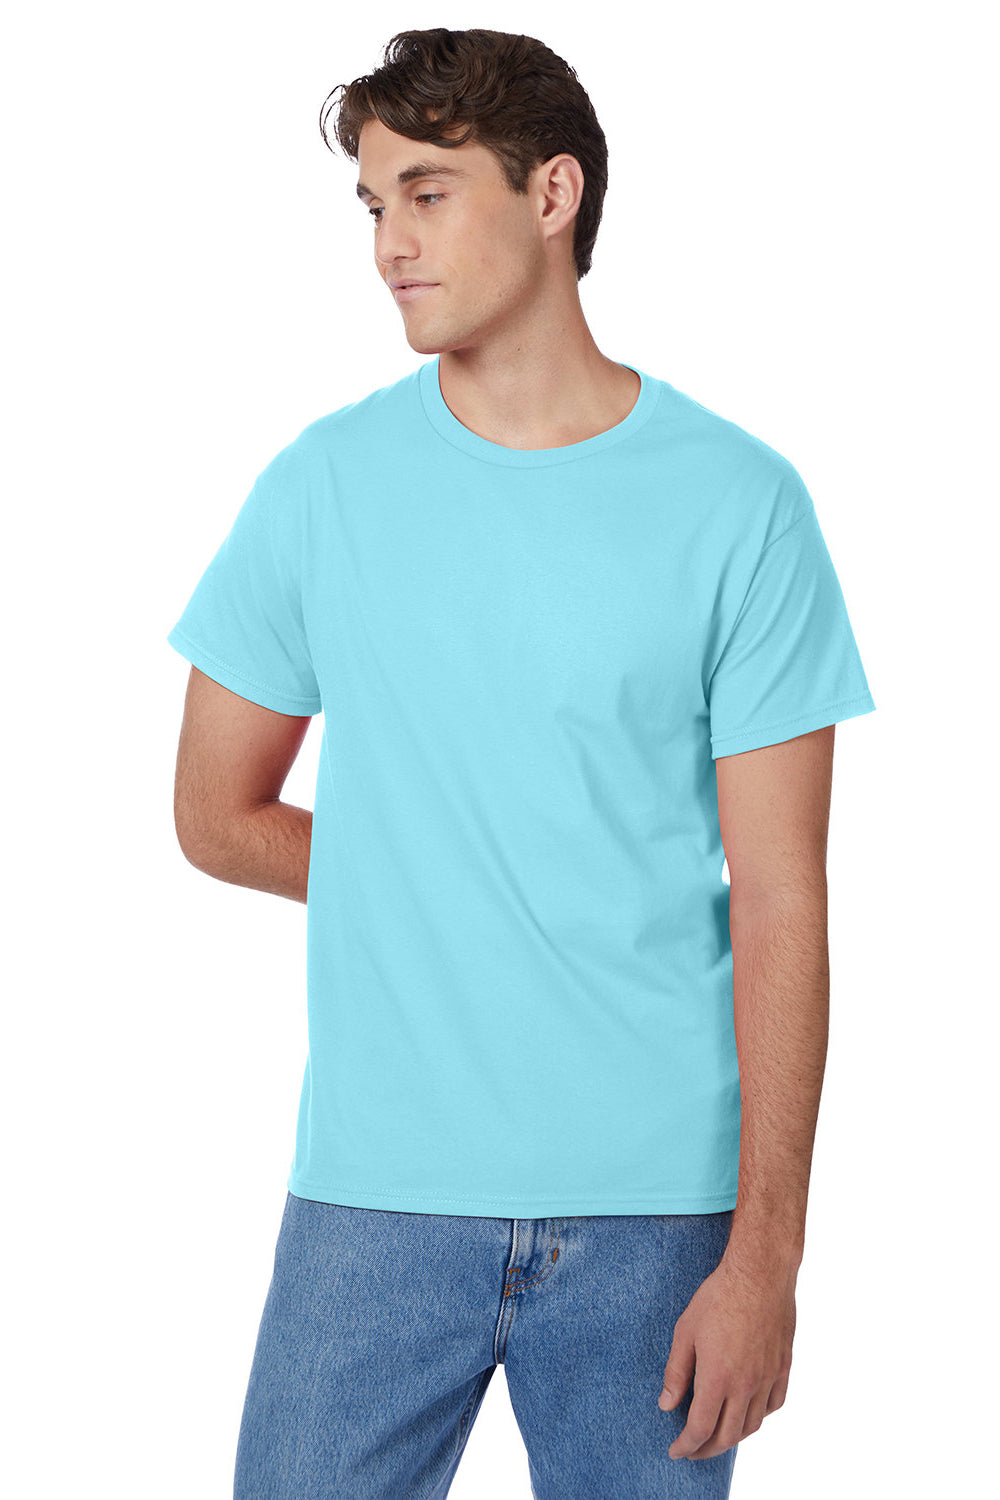 Hanes 5250/5250T Mens ComfortSoft Short Sleeve Crewneck T-Shirt Clean Mint Blue Front